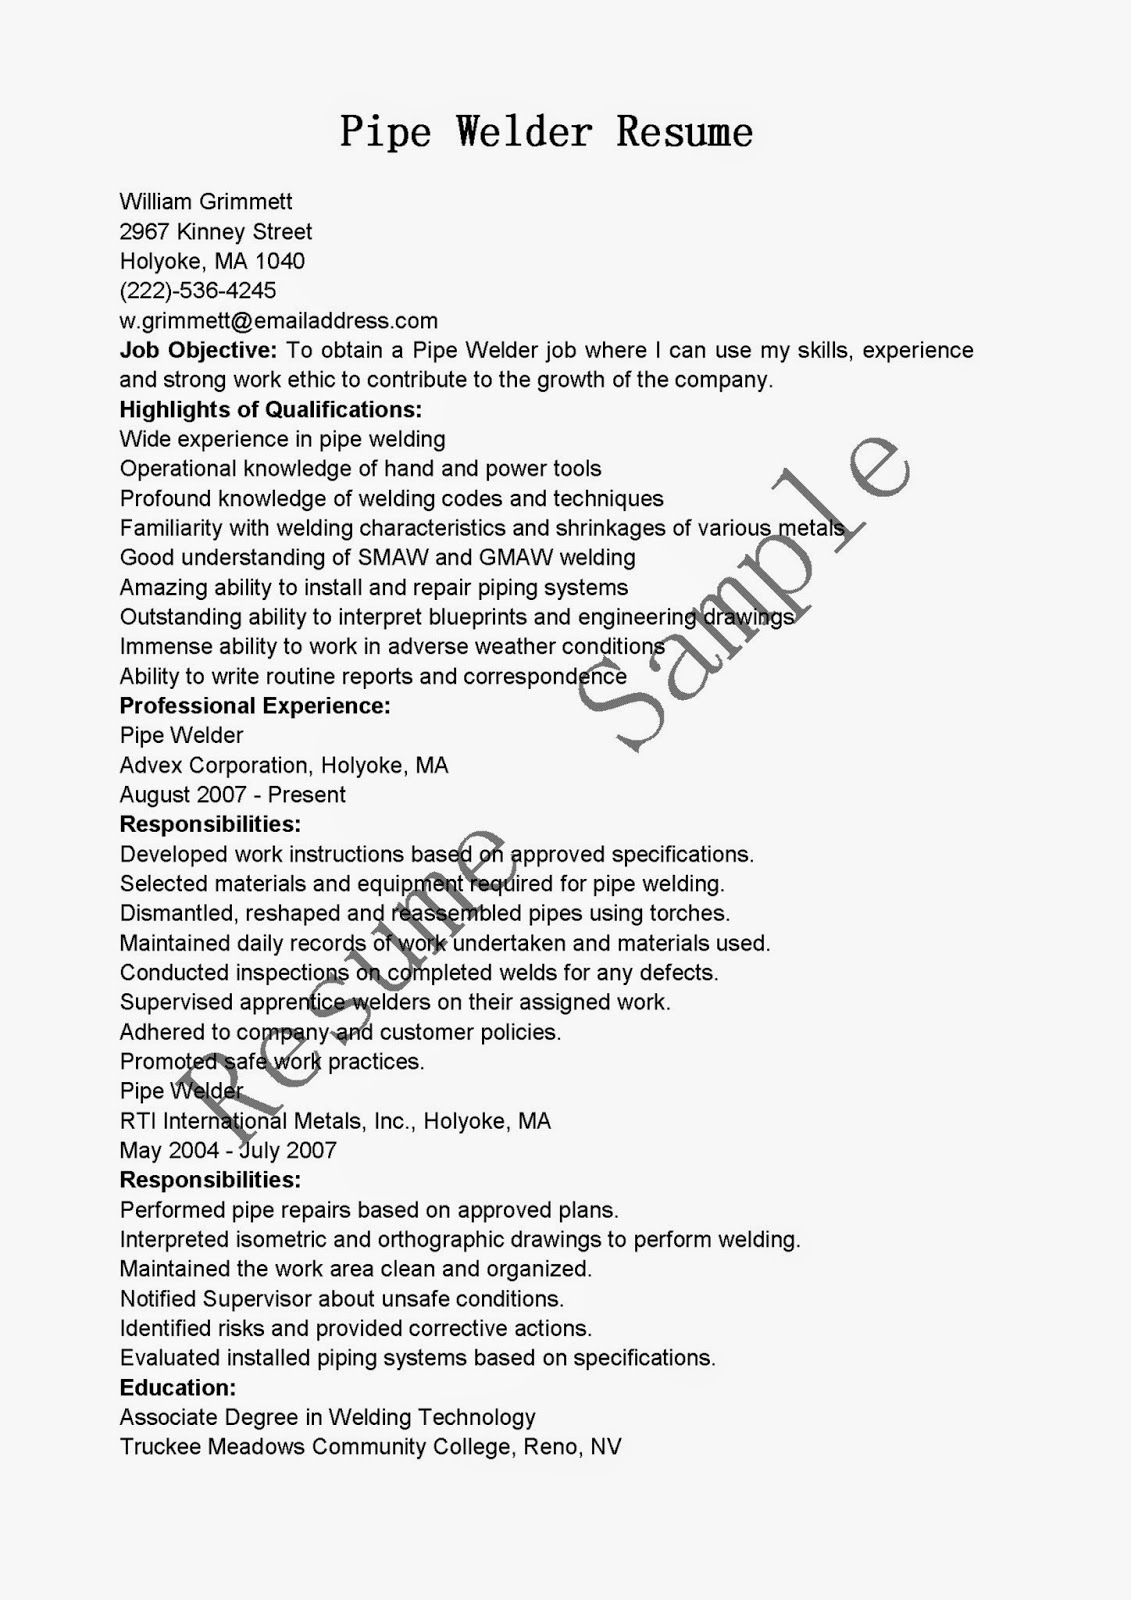 resume samples  pipe welder resume sample